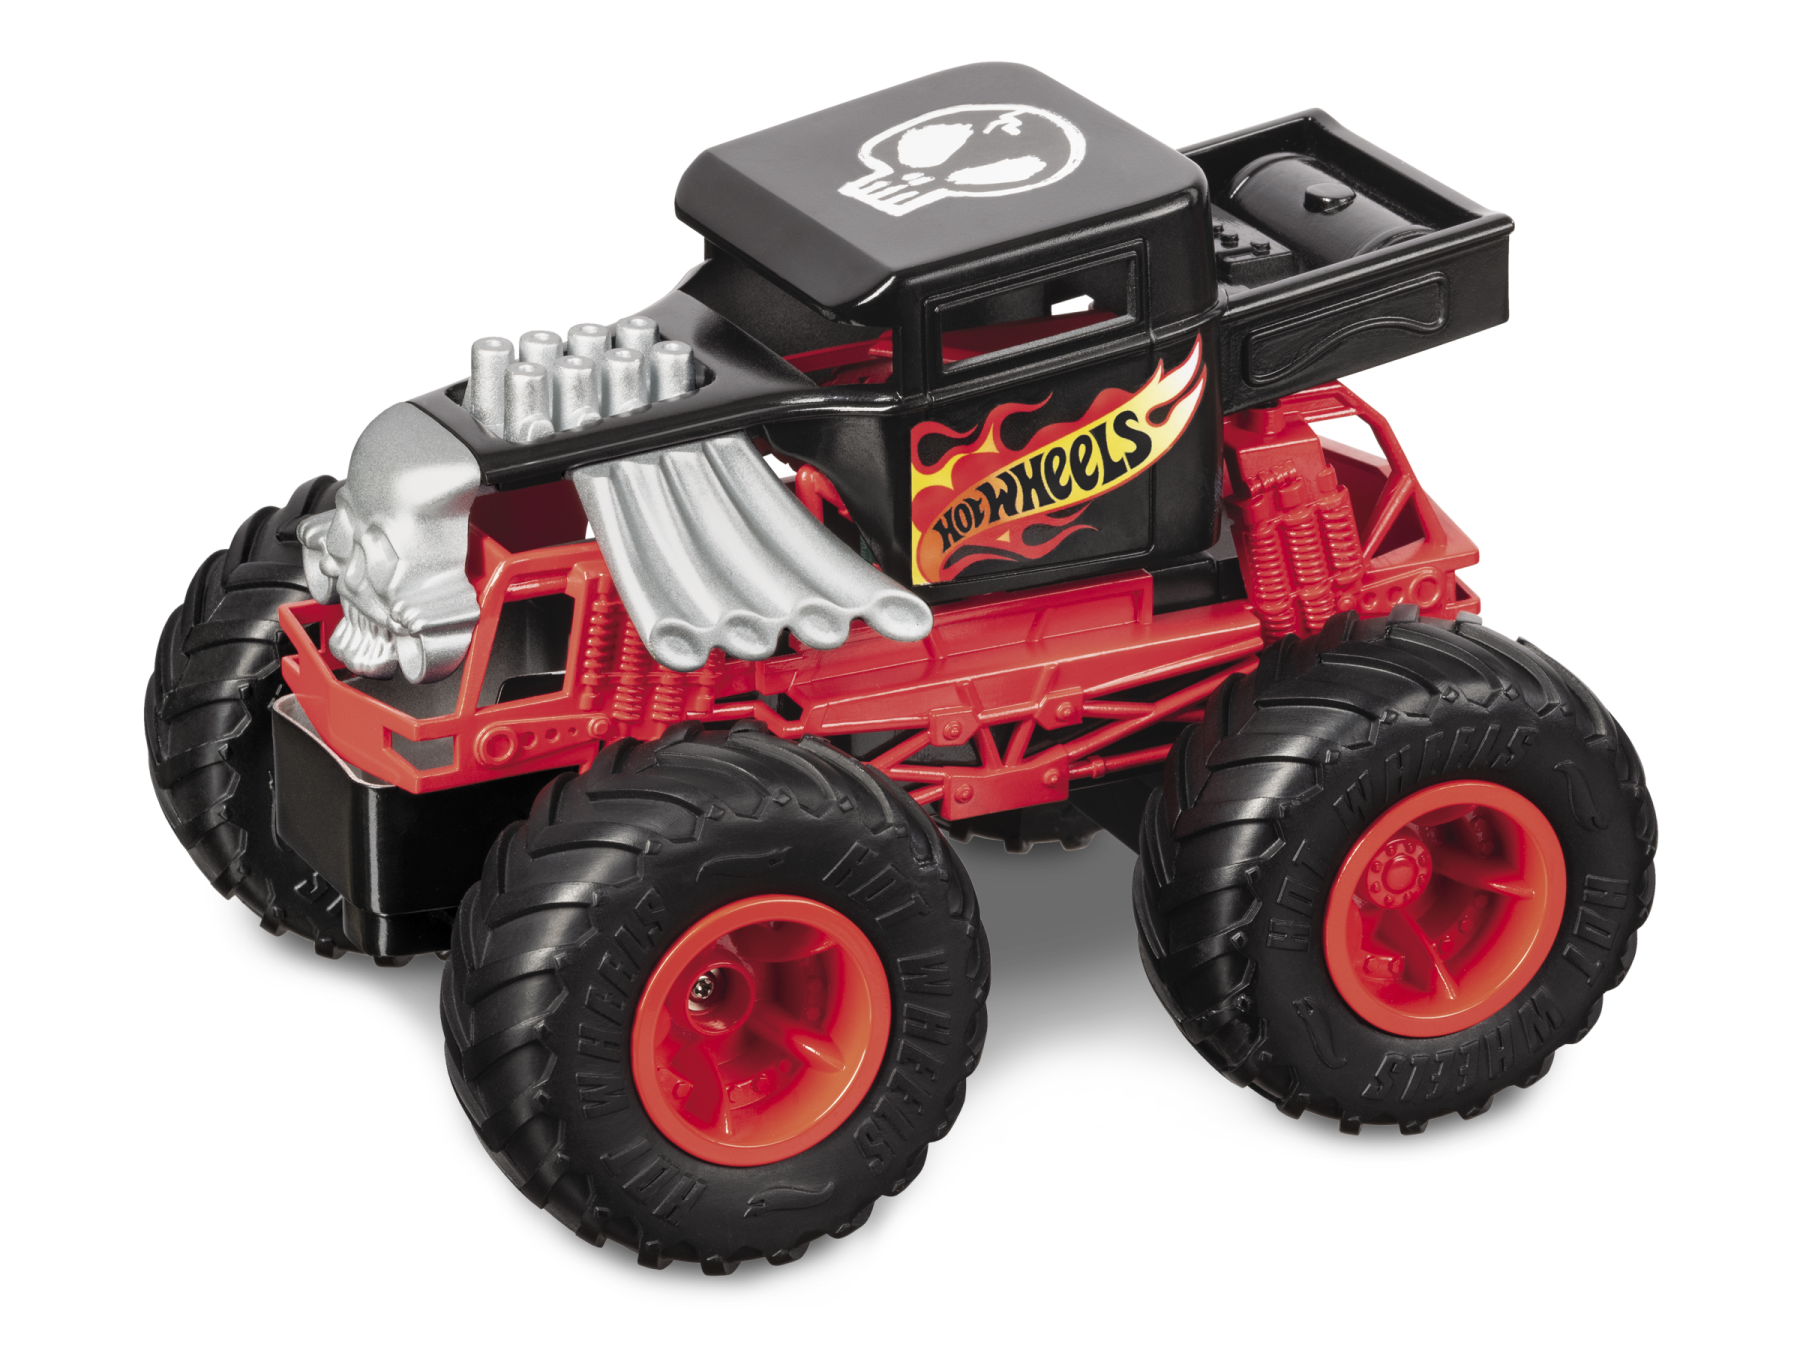 63679 motors monster trucks bone shaker-macchina telecomandata per bambini 2.4 ghz rosso/nero-63679 - Hot Wheels